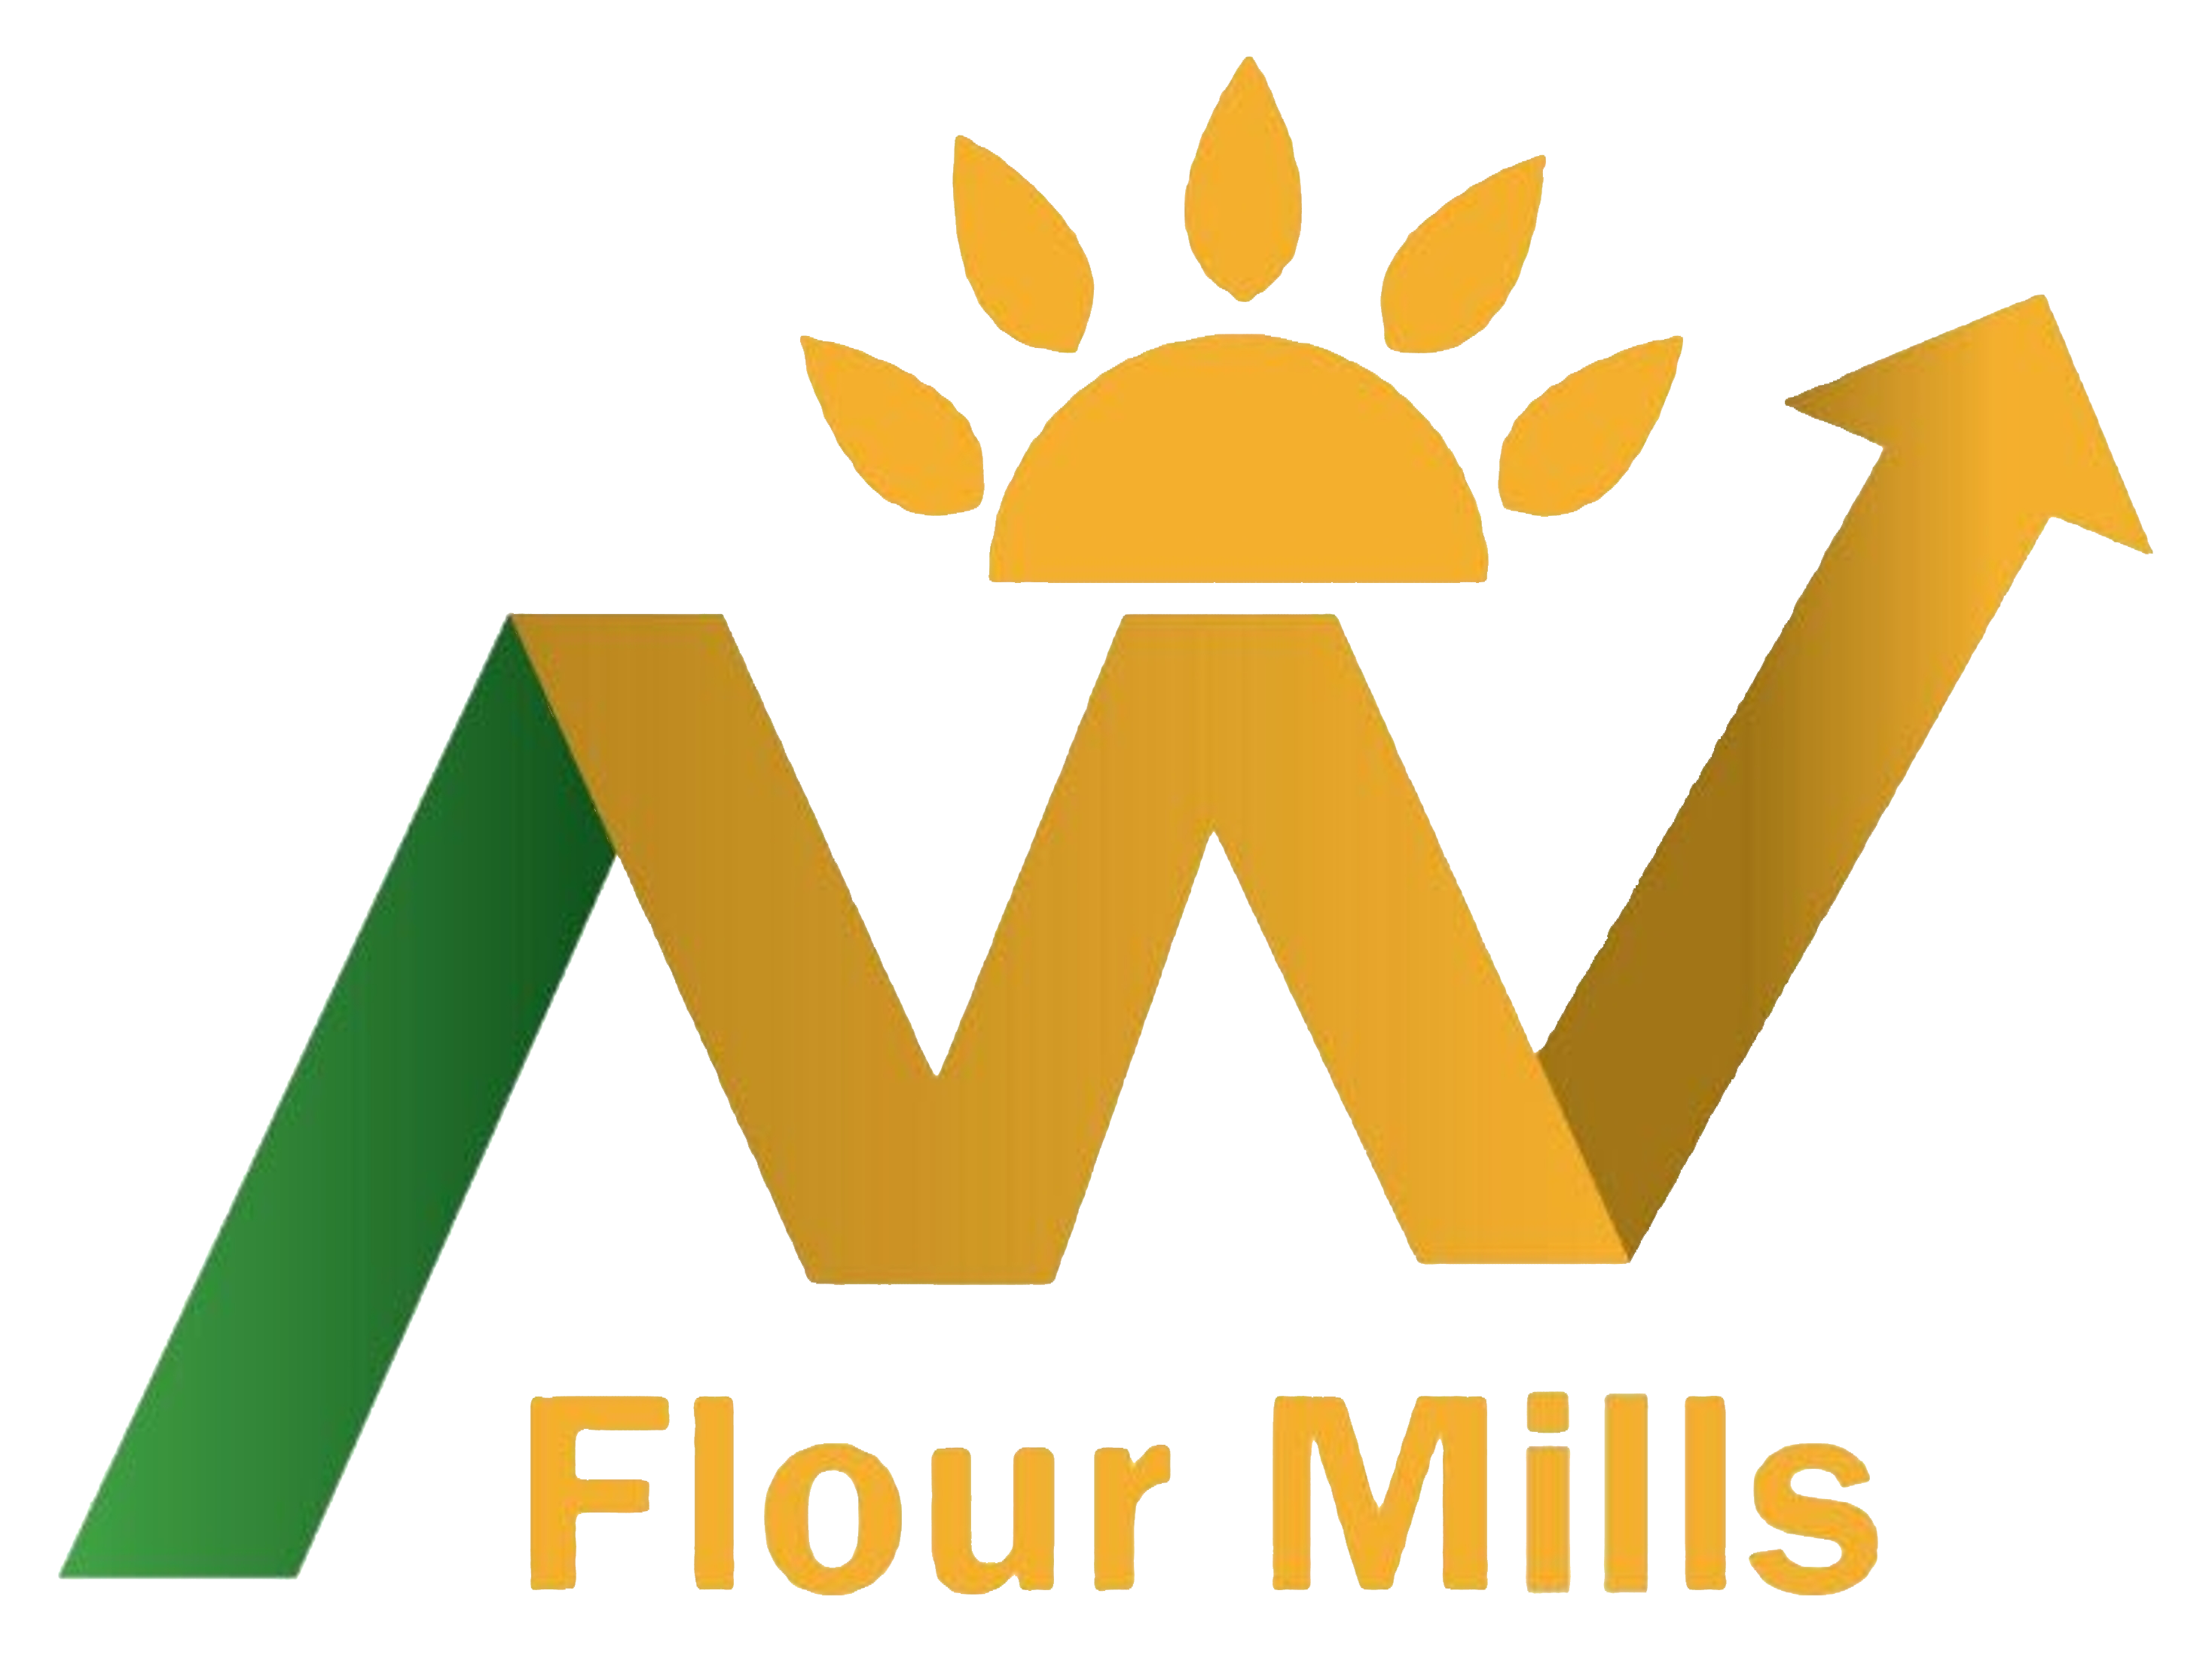 flour clipart grain bag